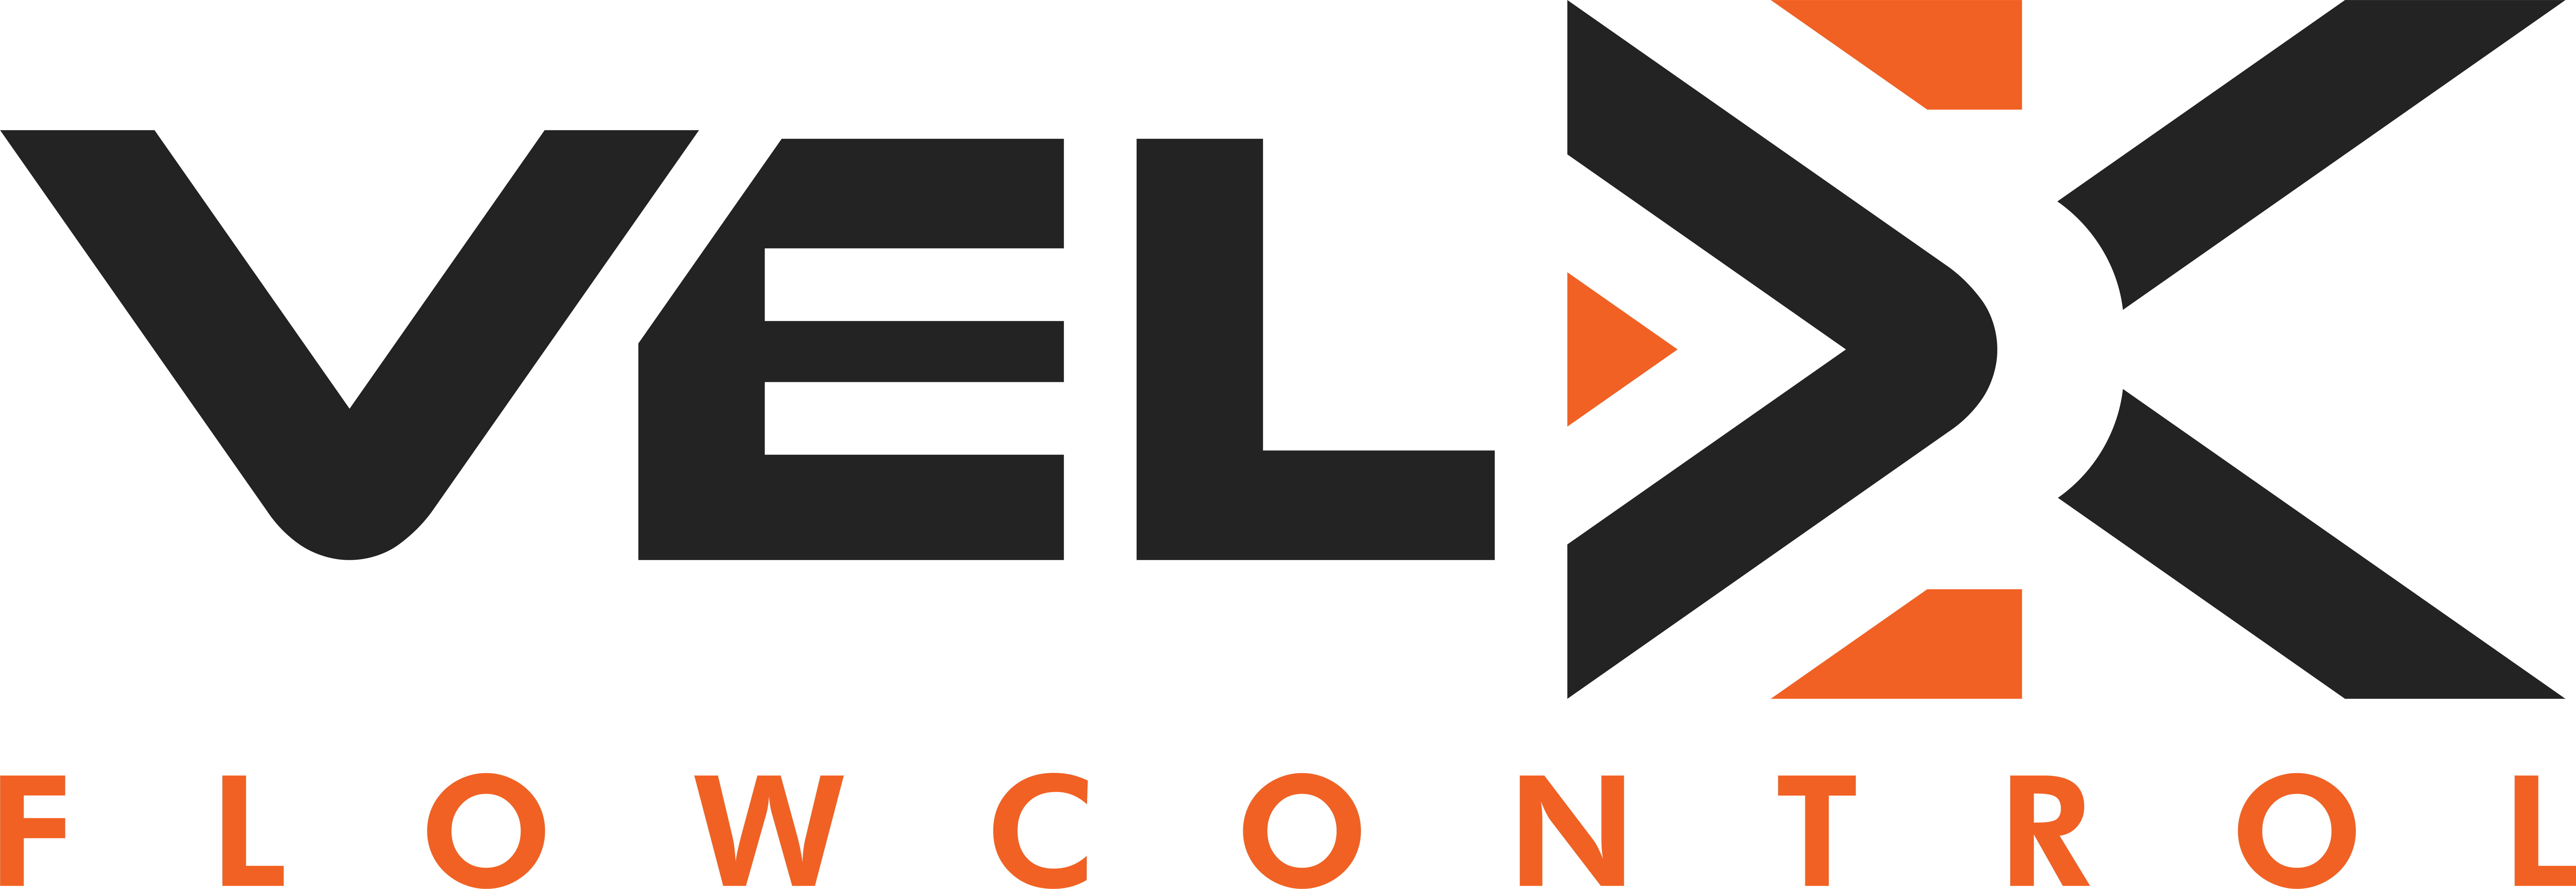 Velex Flow control Logo